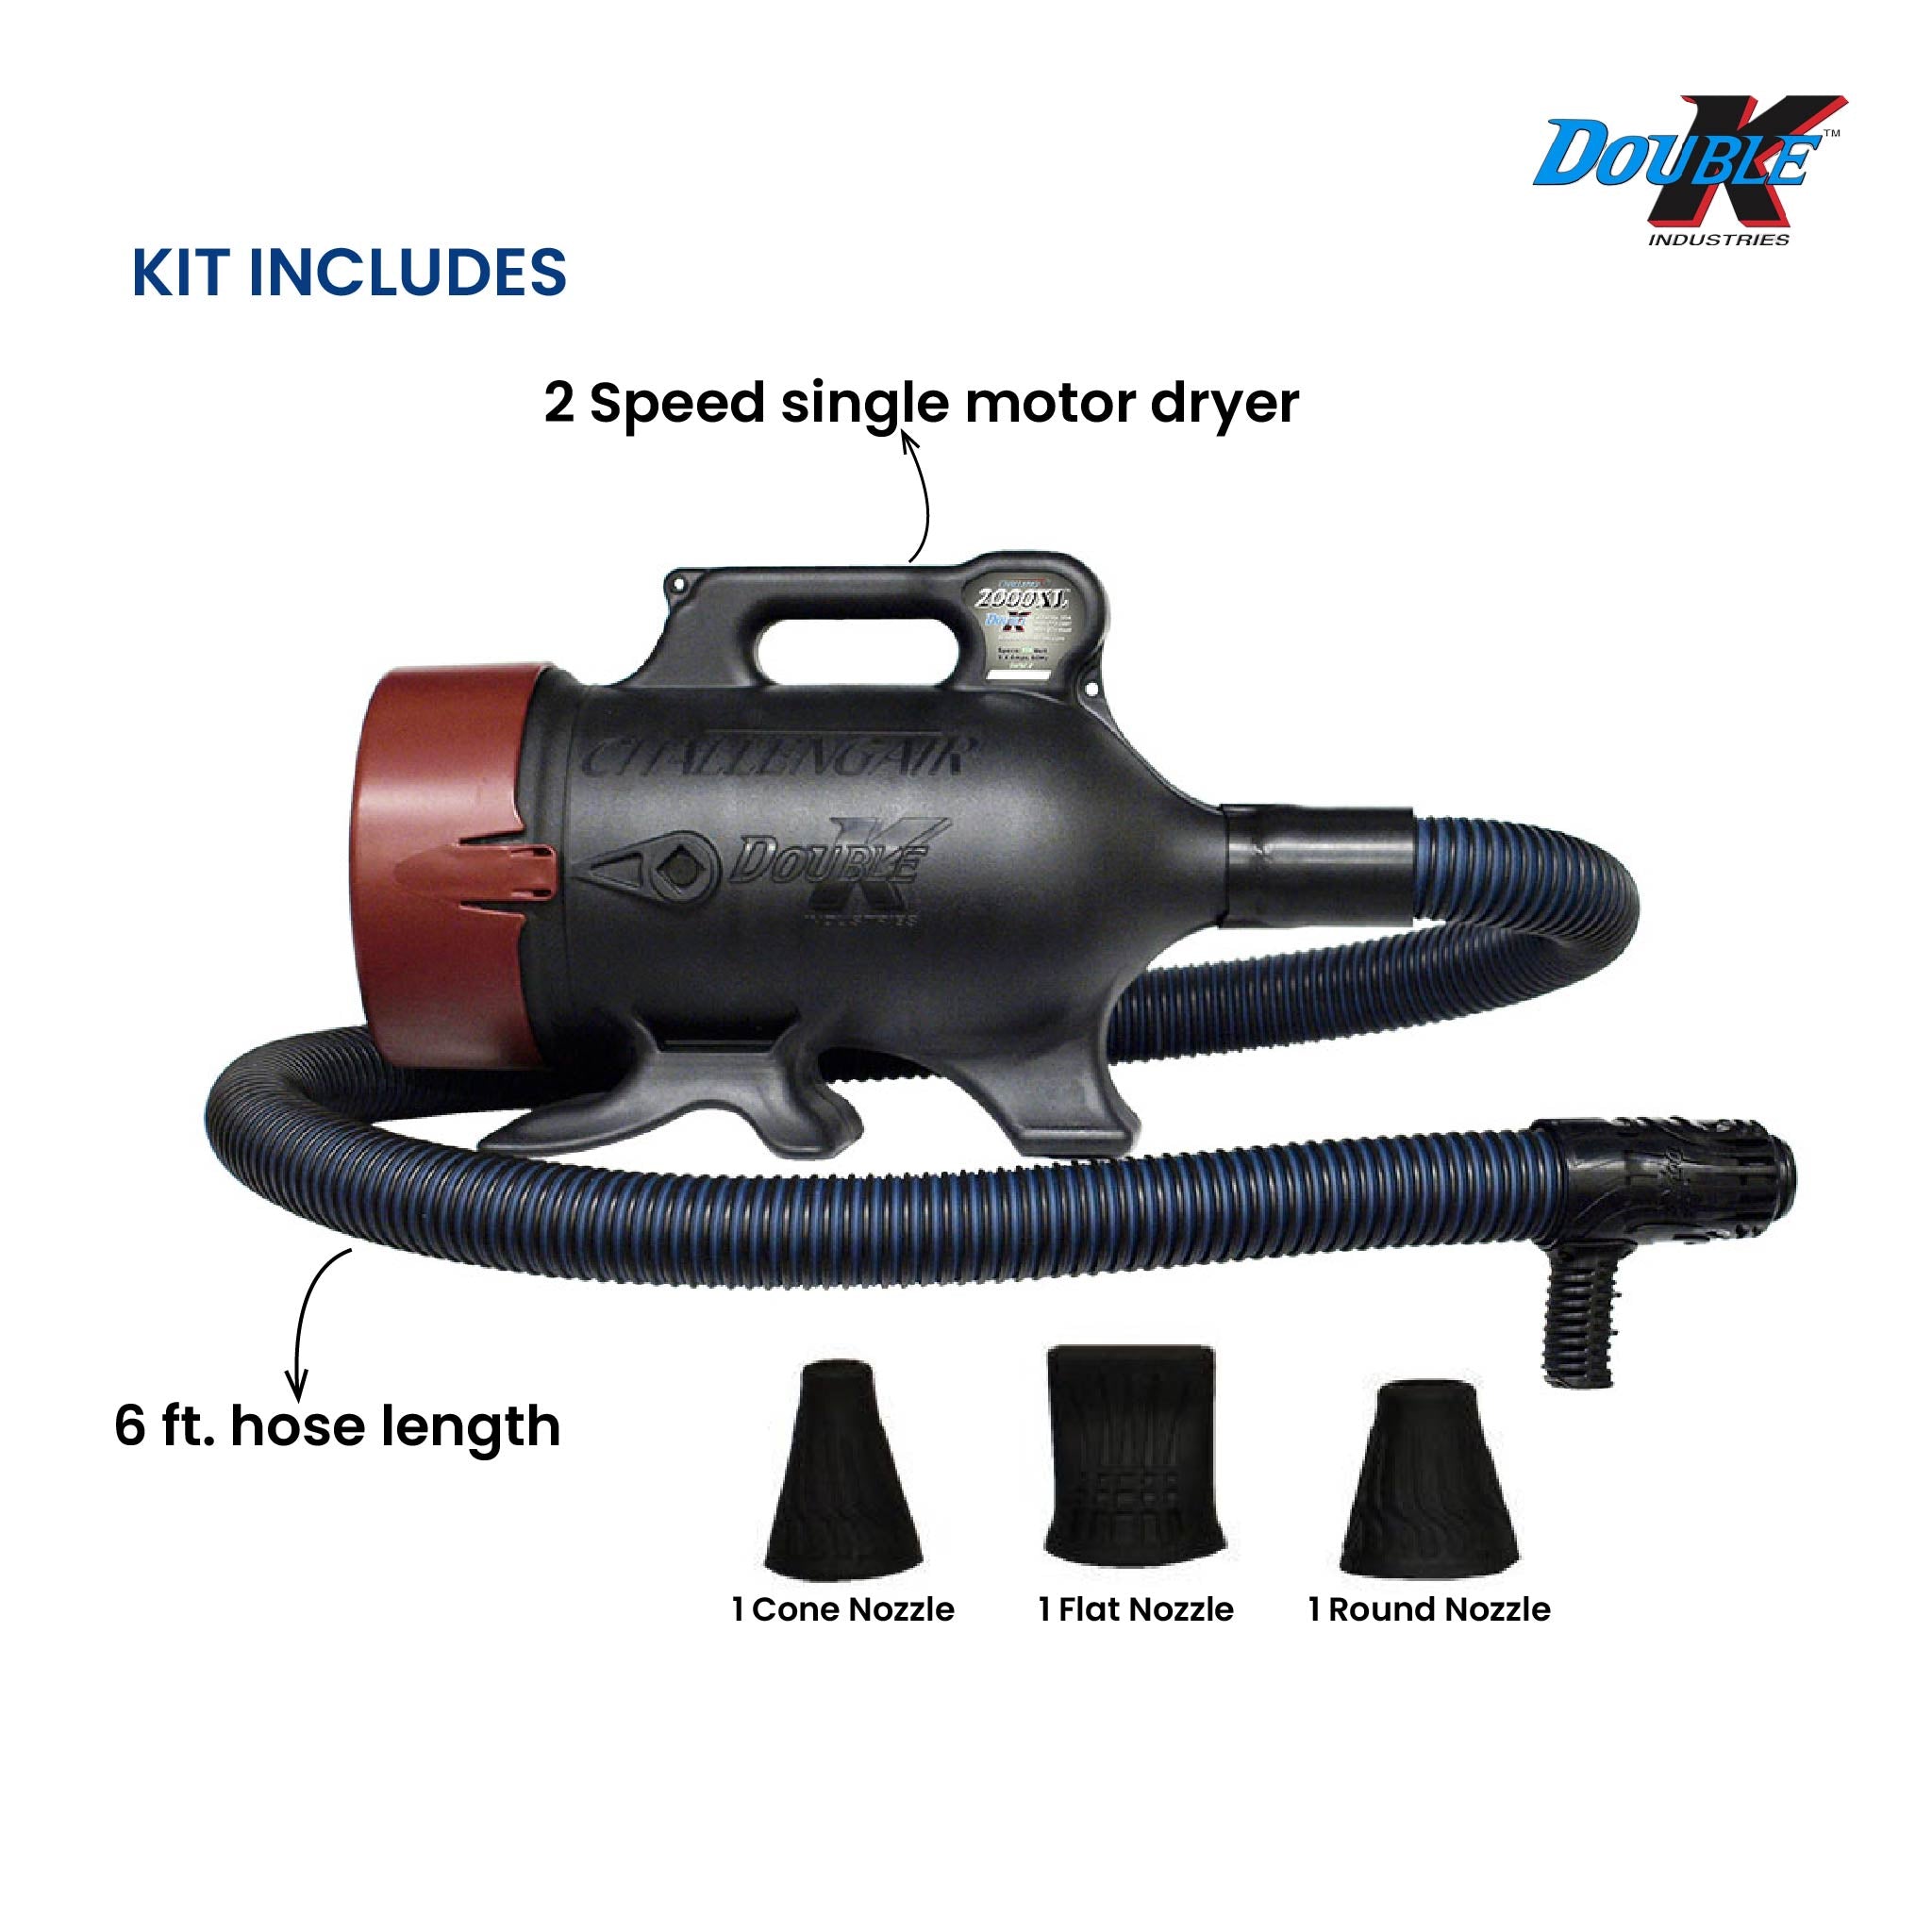 Double K Challengair 2000 Force 2-Speed Single Motor Dog Dryer